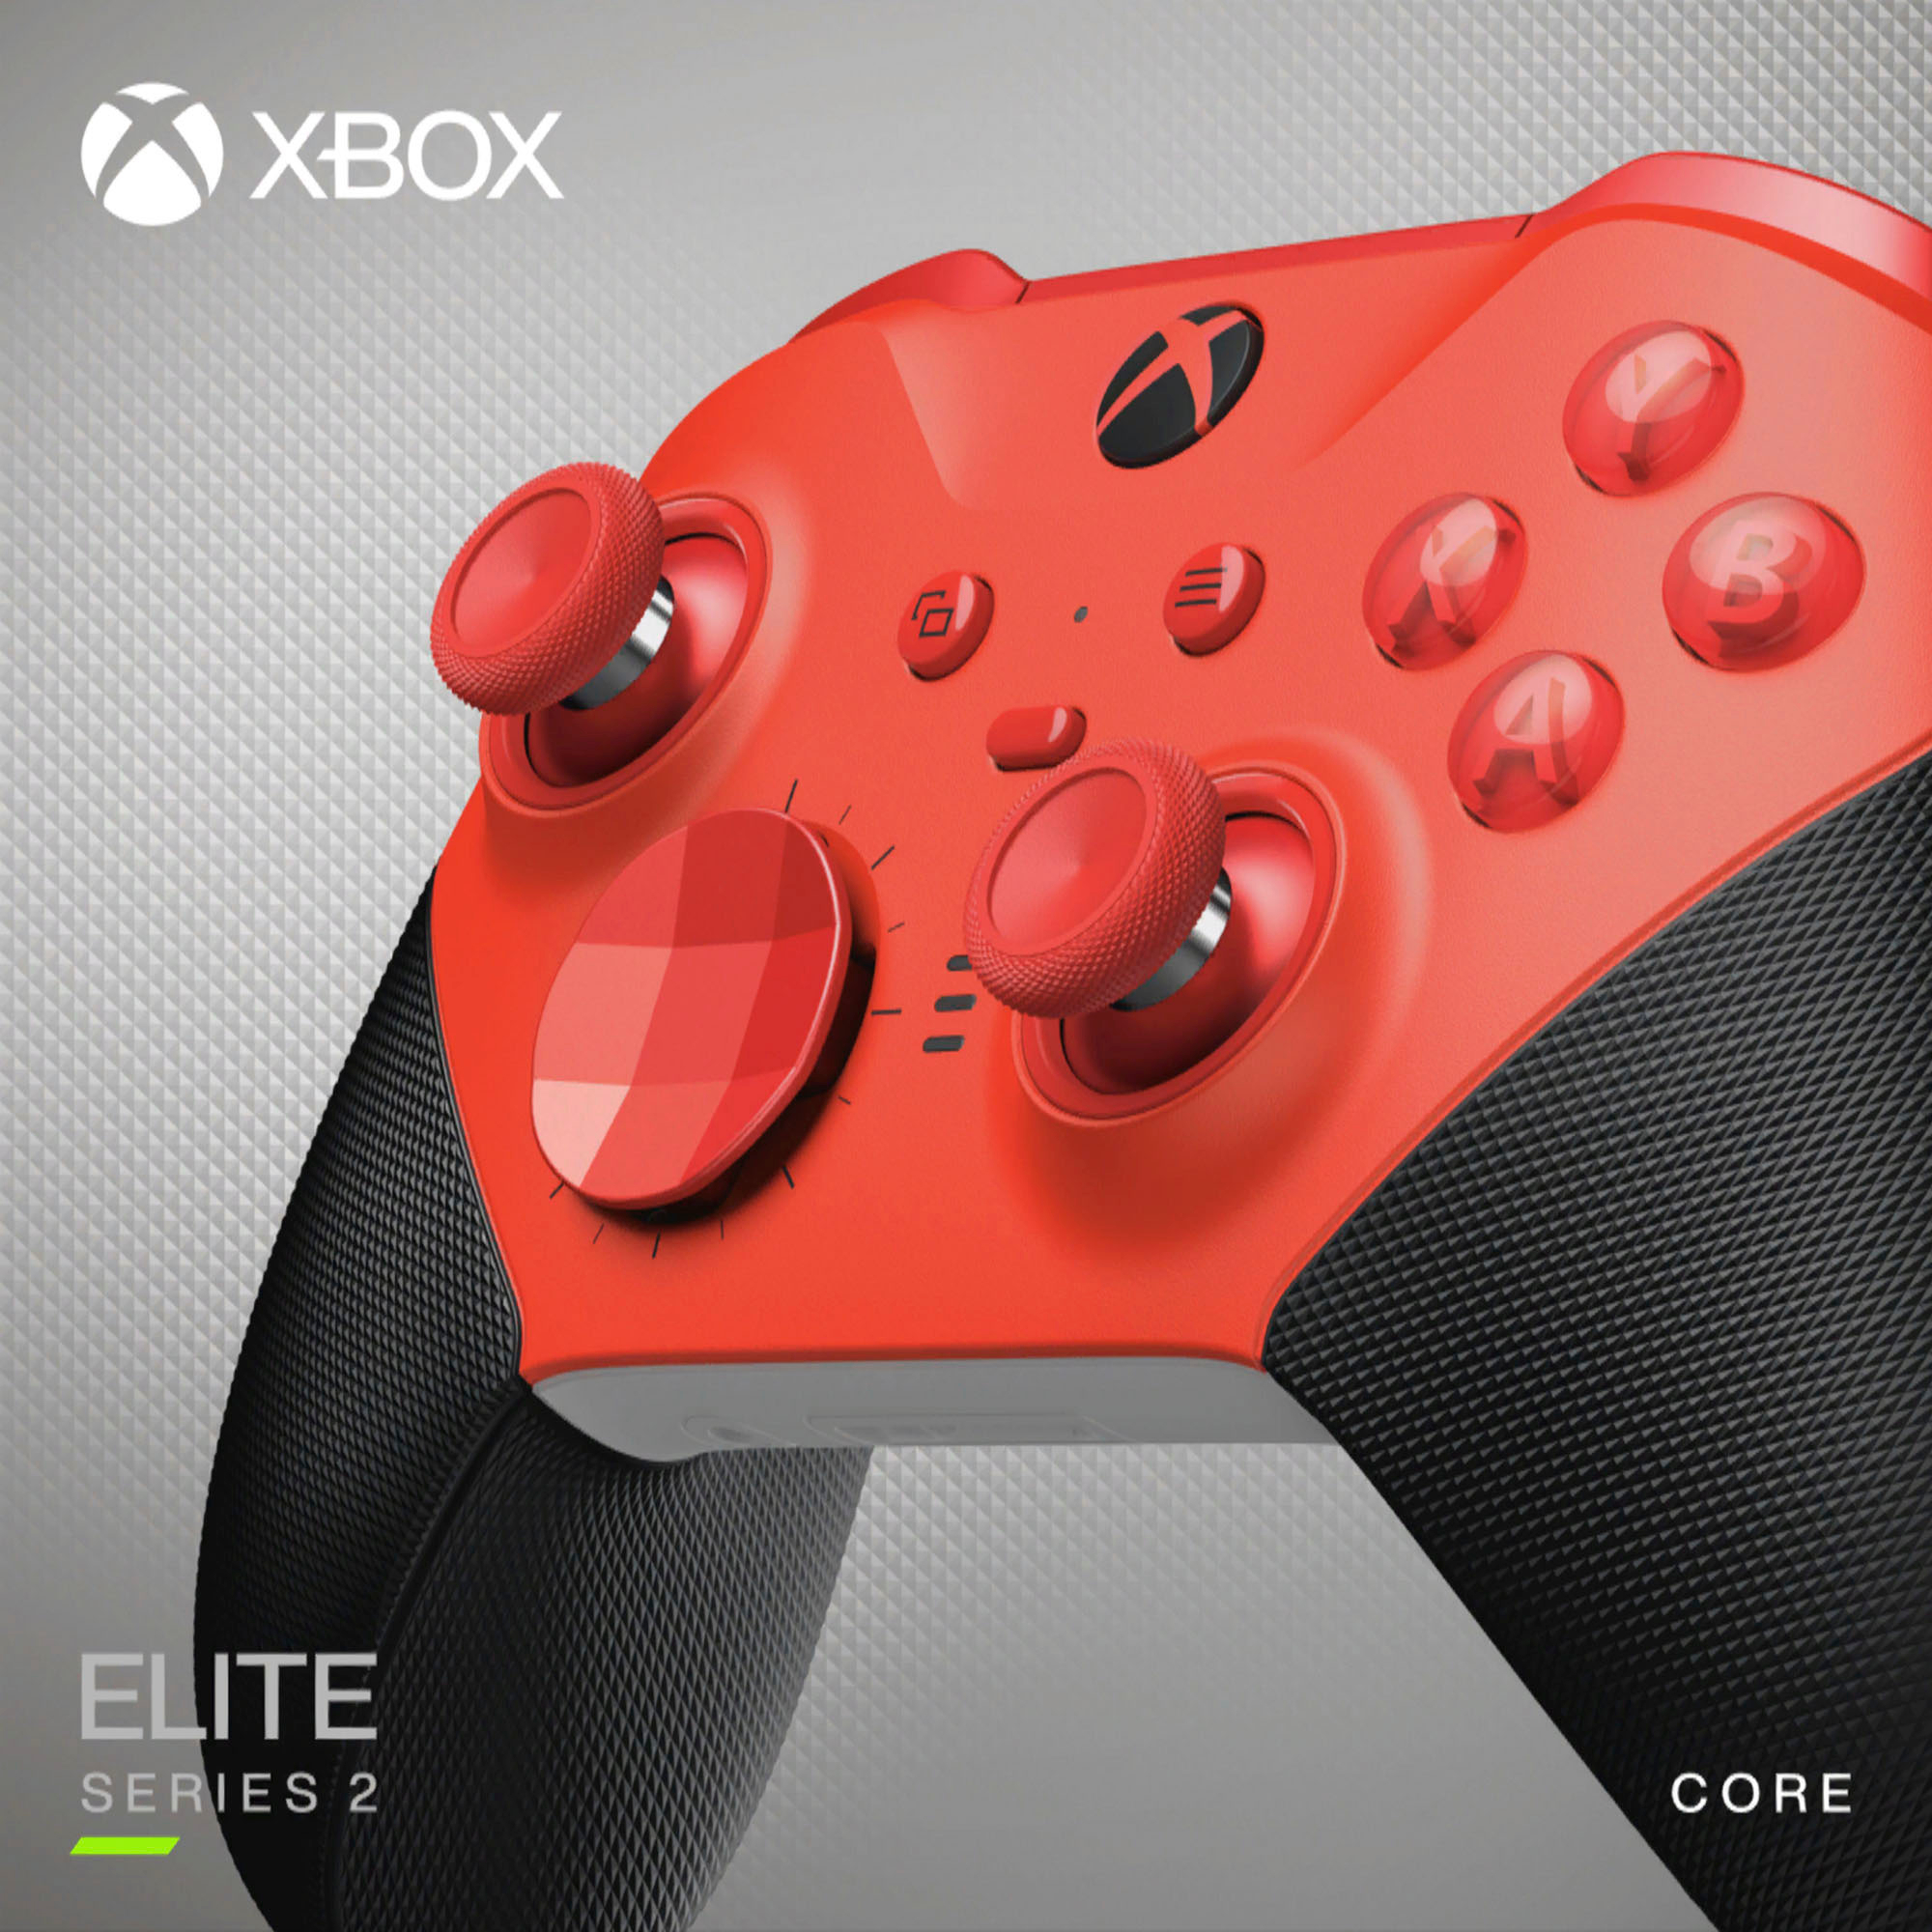 Xbox Elite Series 2 Core Wireless Controller for Xbox One, Xbox